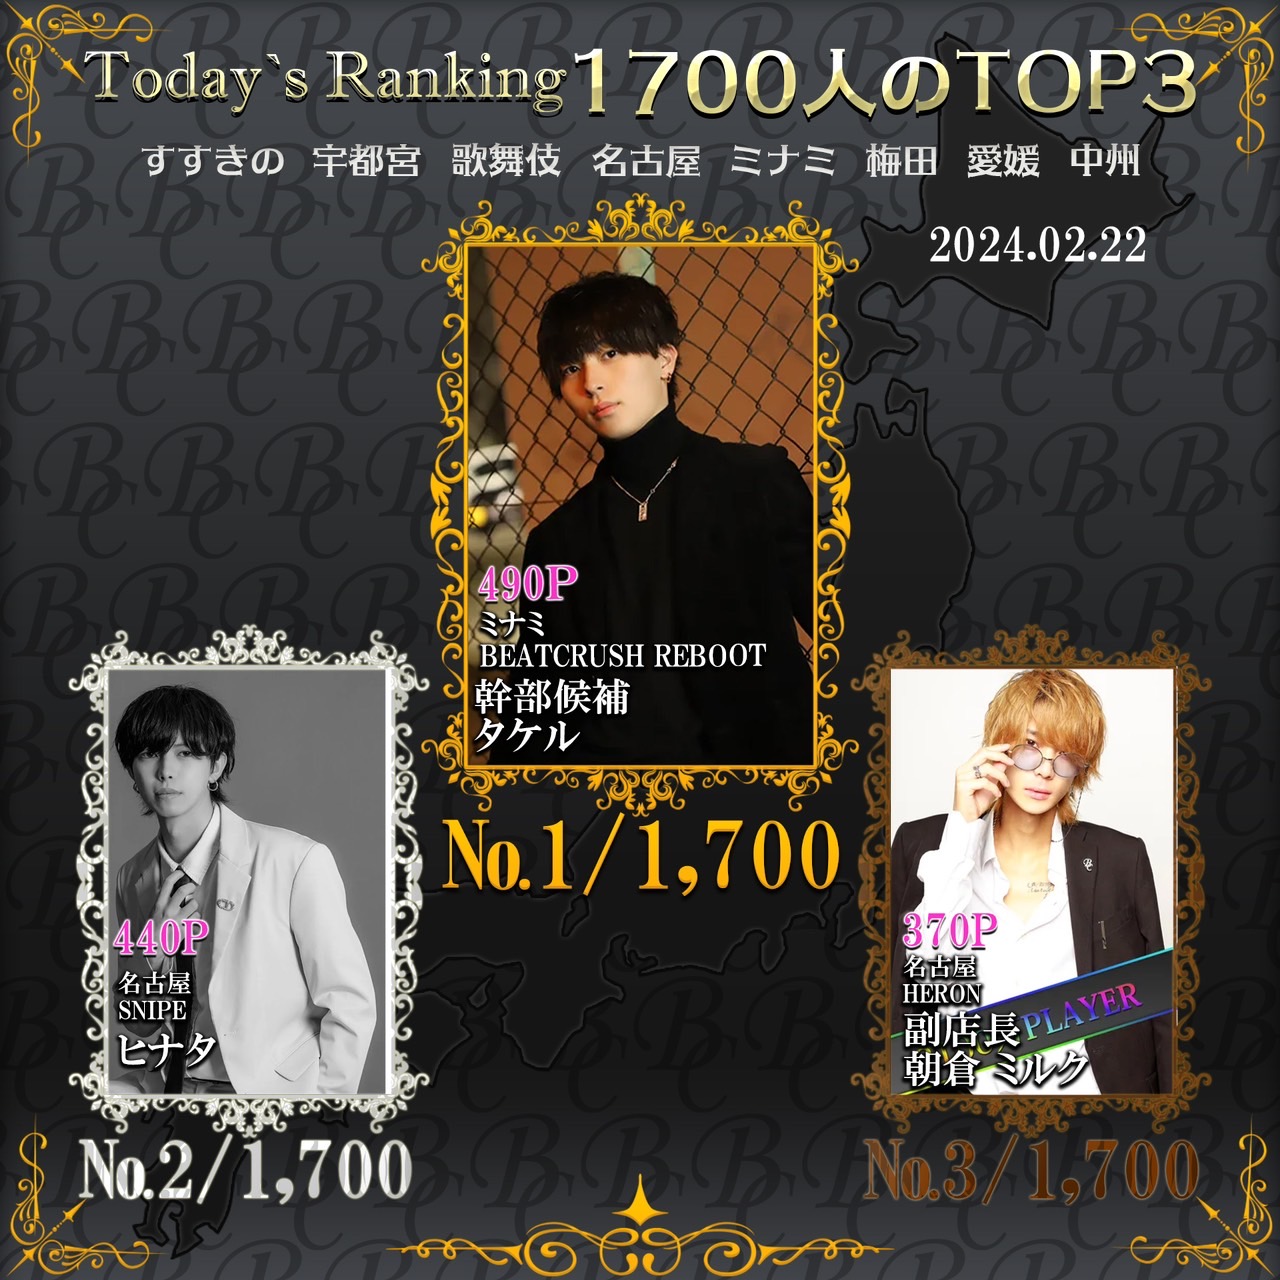 2/22 Today’s Ranking